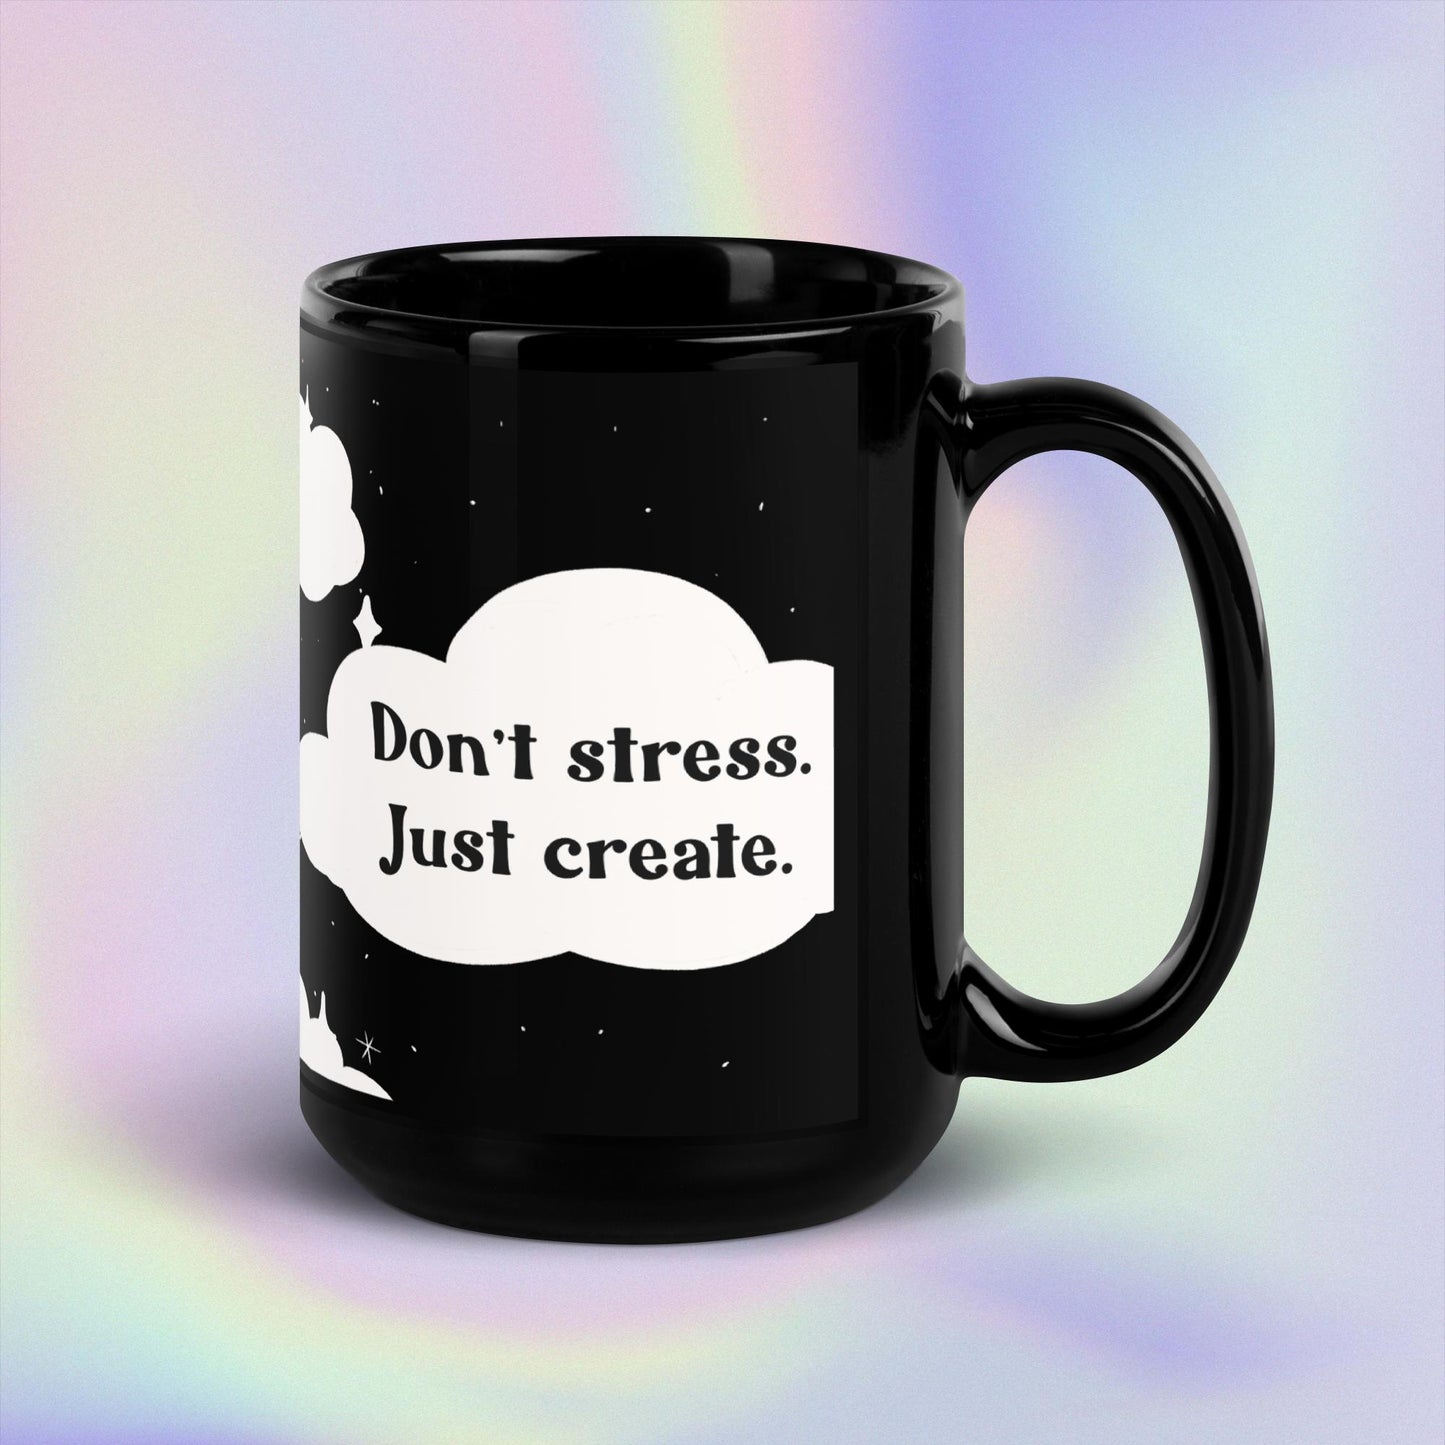 Don't stress, just create drink mug